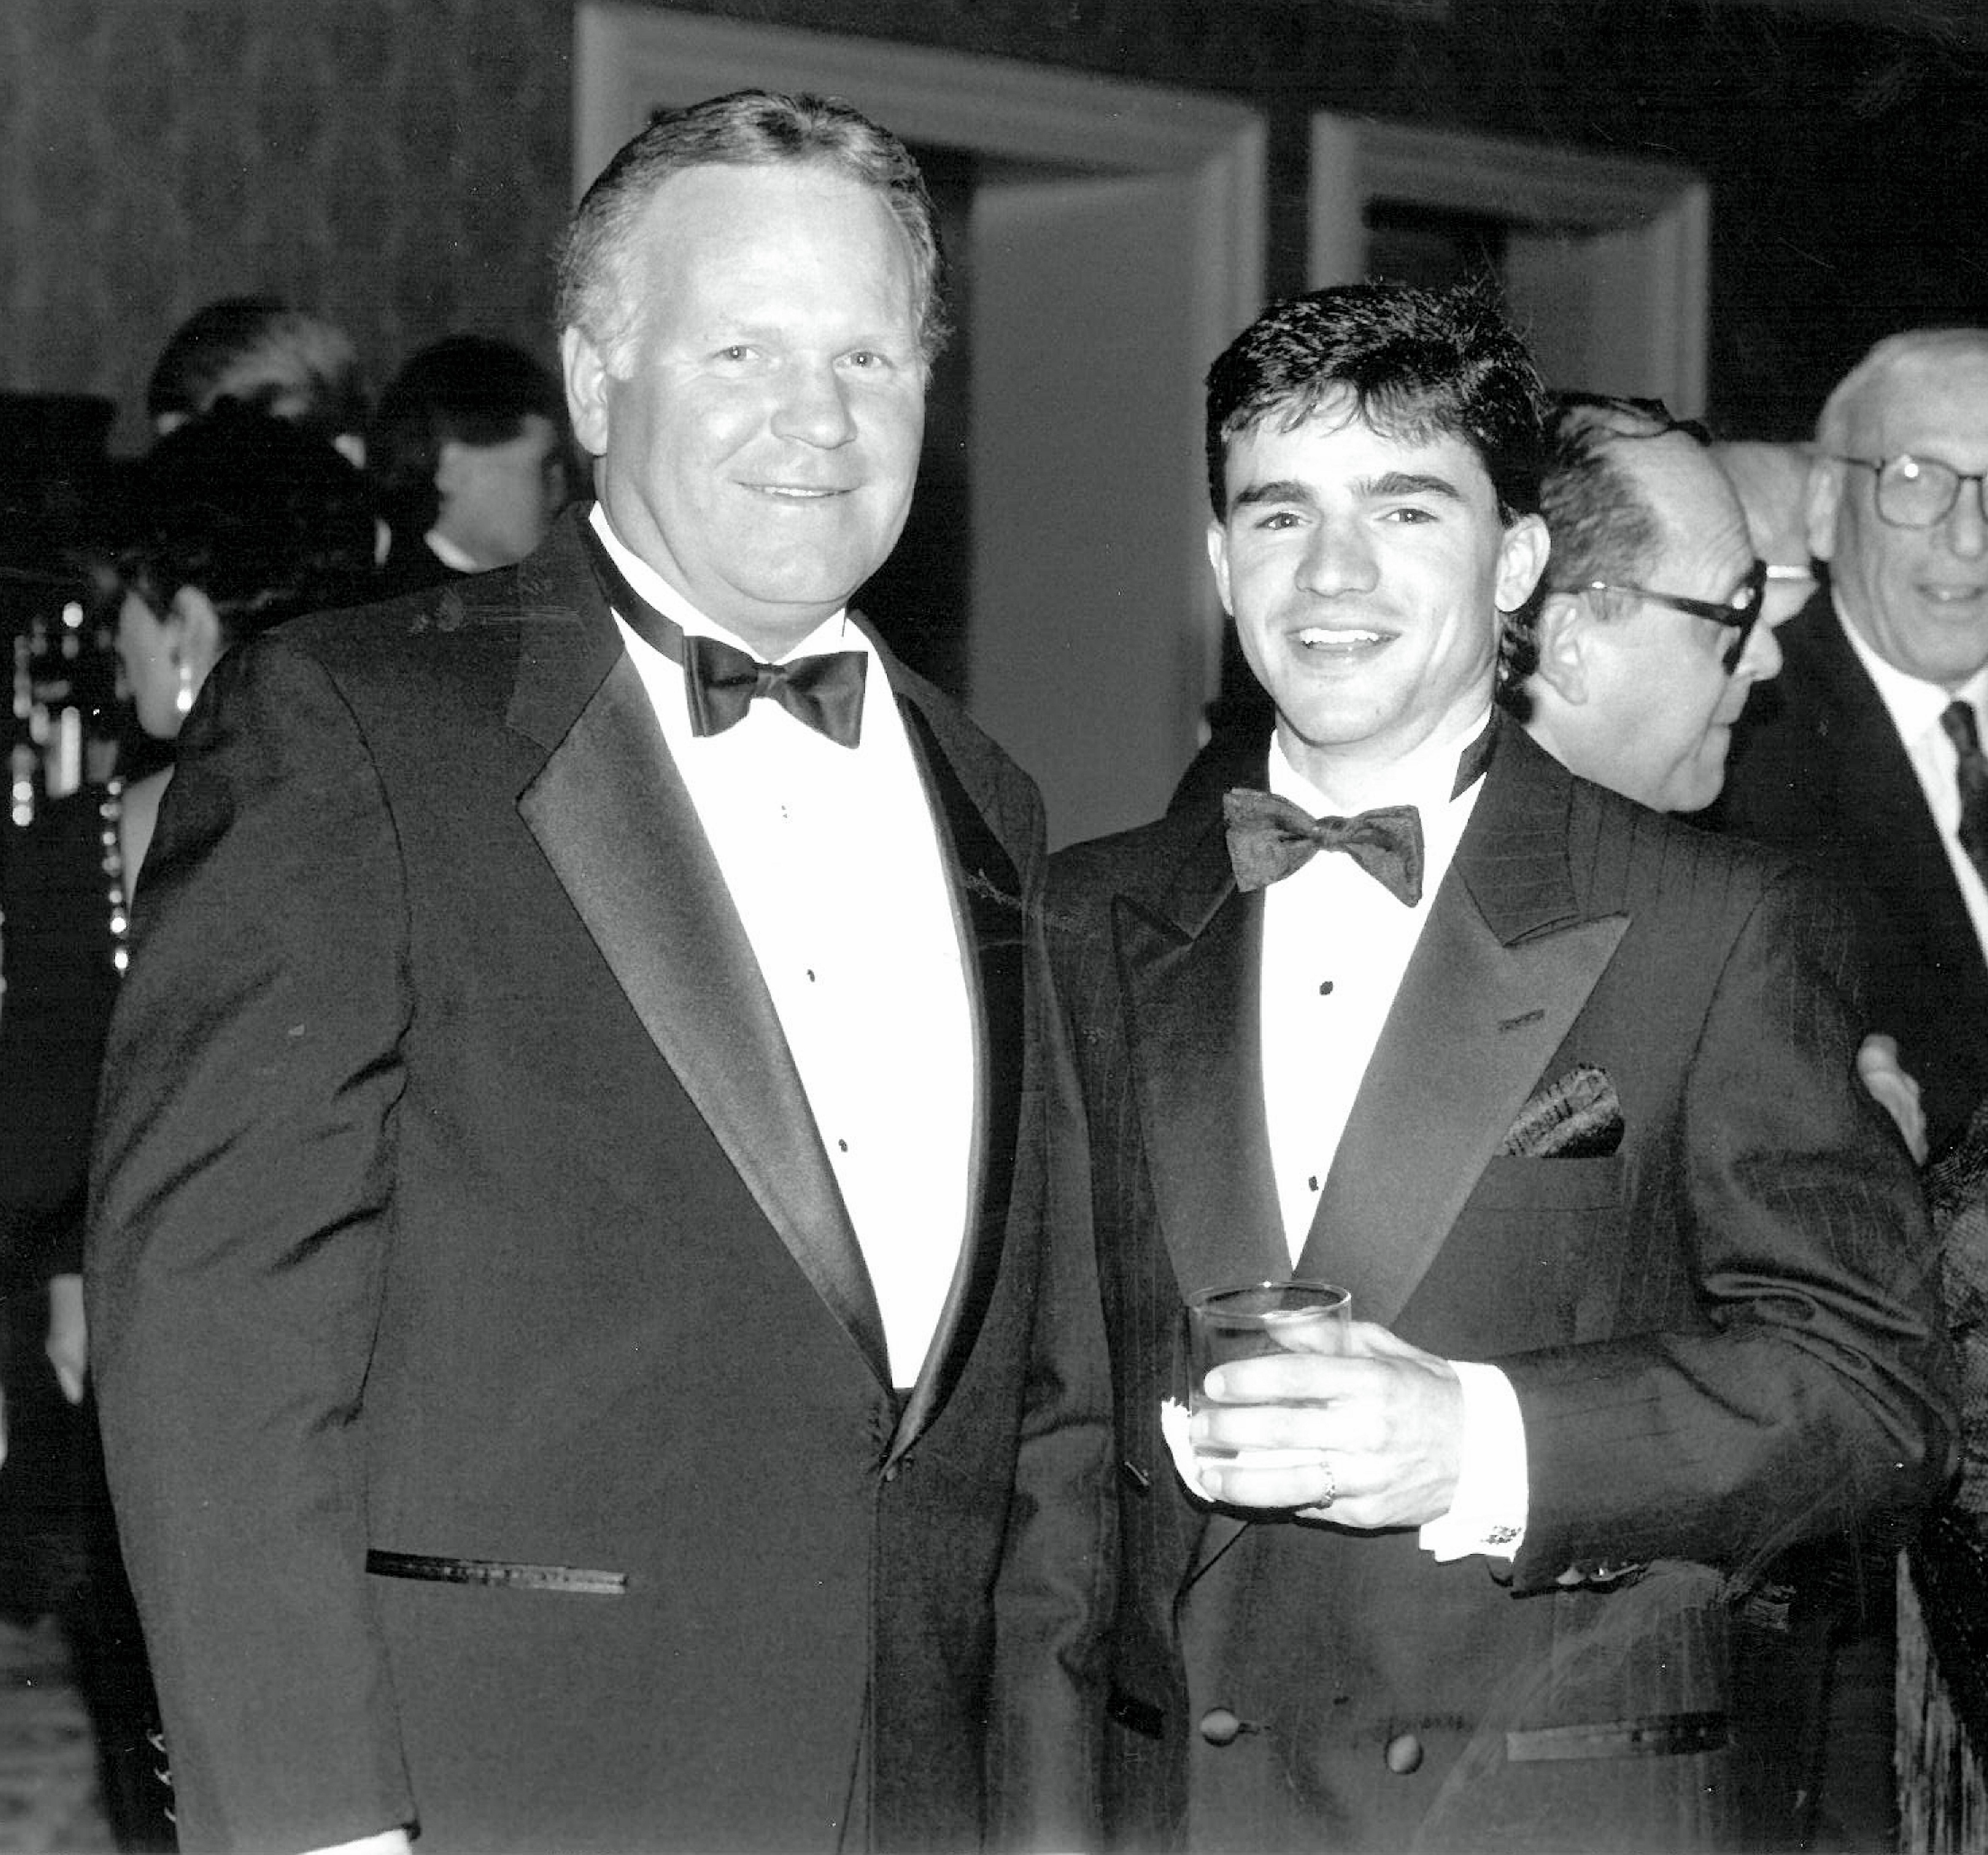 Gary Jones, left, with Kent Desormeaux at the California Thoroughbred Breeders Association awards dinner, 1992 (Benoit Photo)